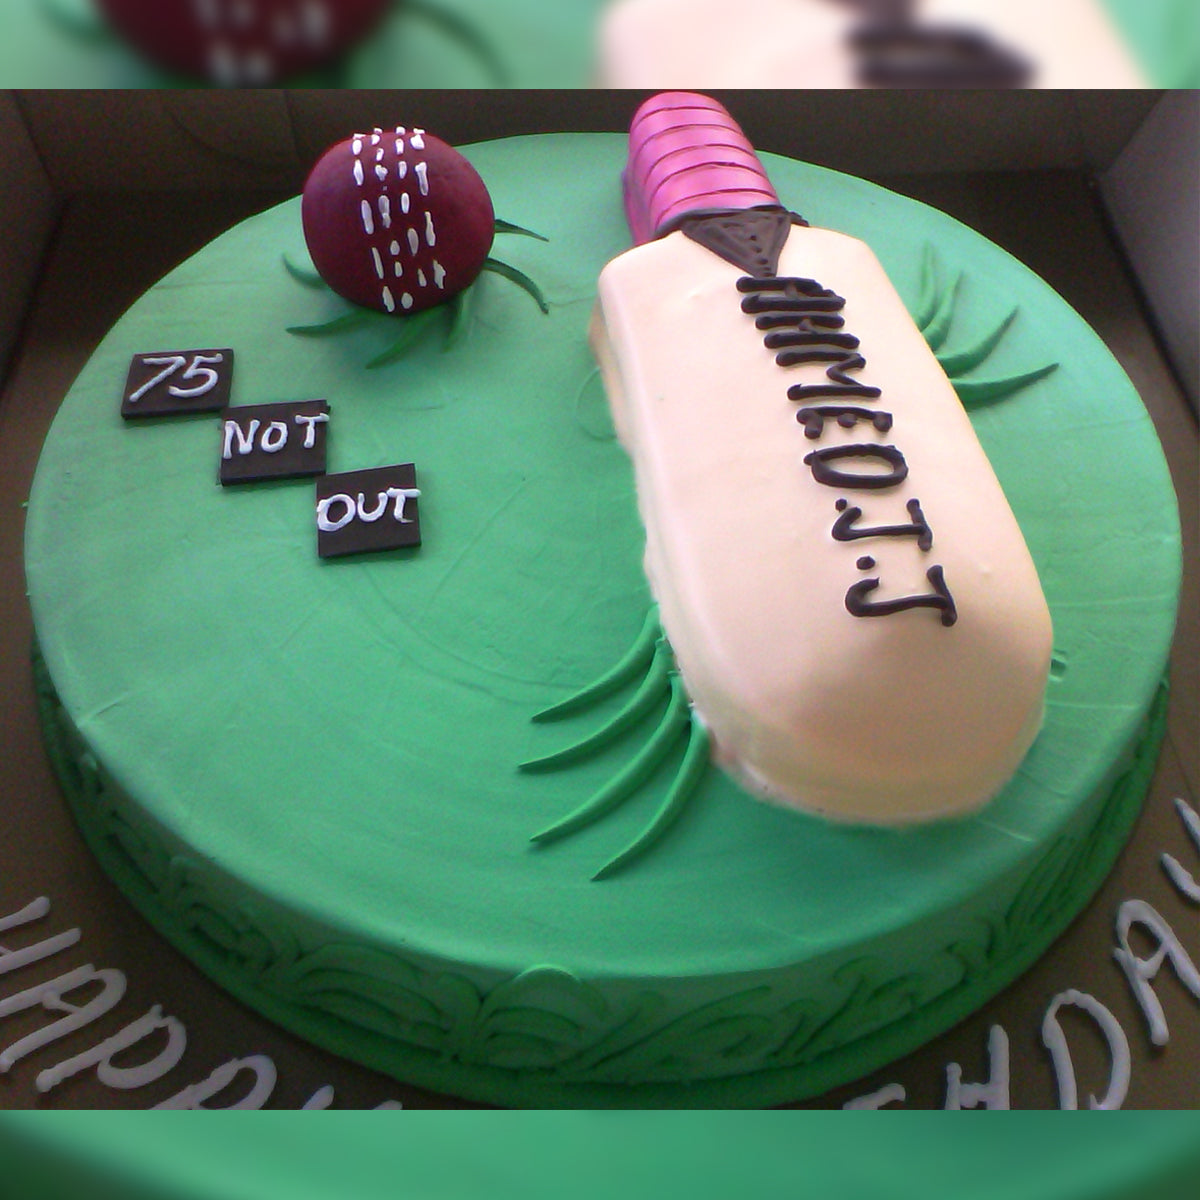 Send Cricket Life Birthday Cake to Sri Lanka, Lakwimana